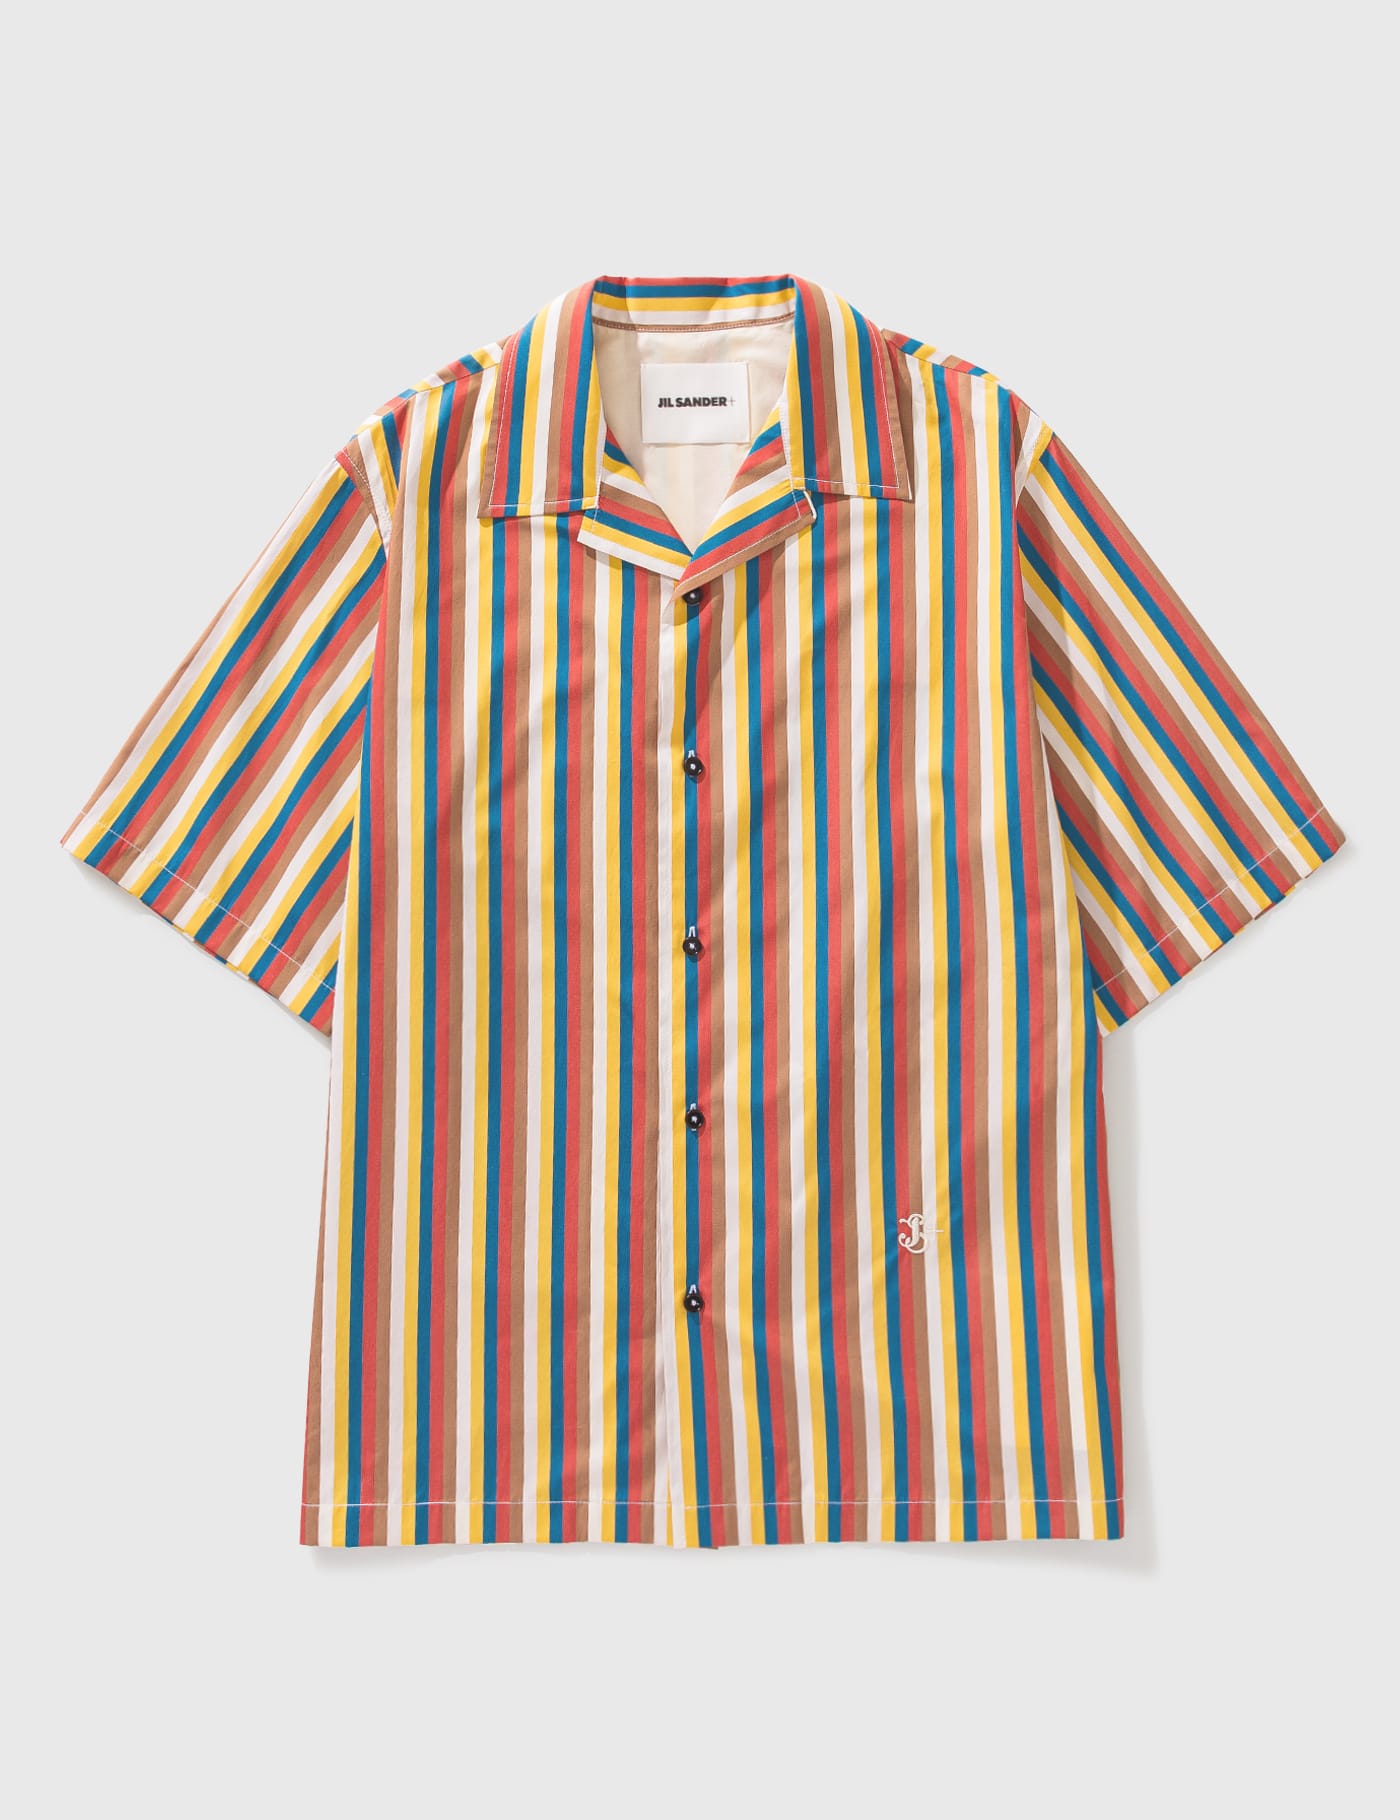 Jil Sander - Jil Sander+ Stripe Shirt | HBX - Globally Curated 